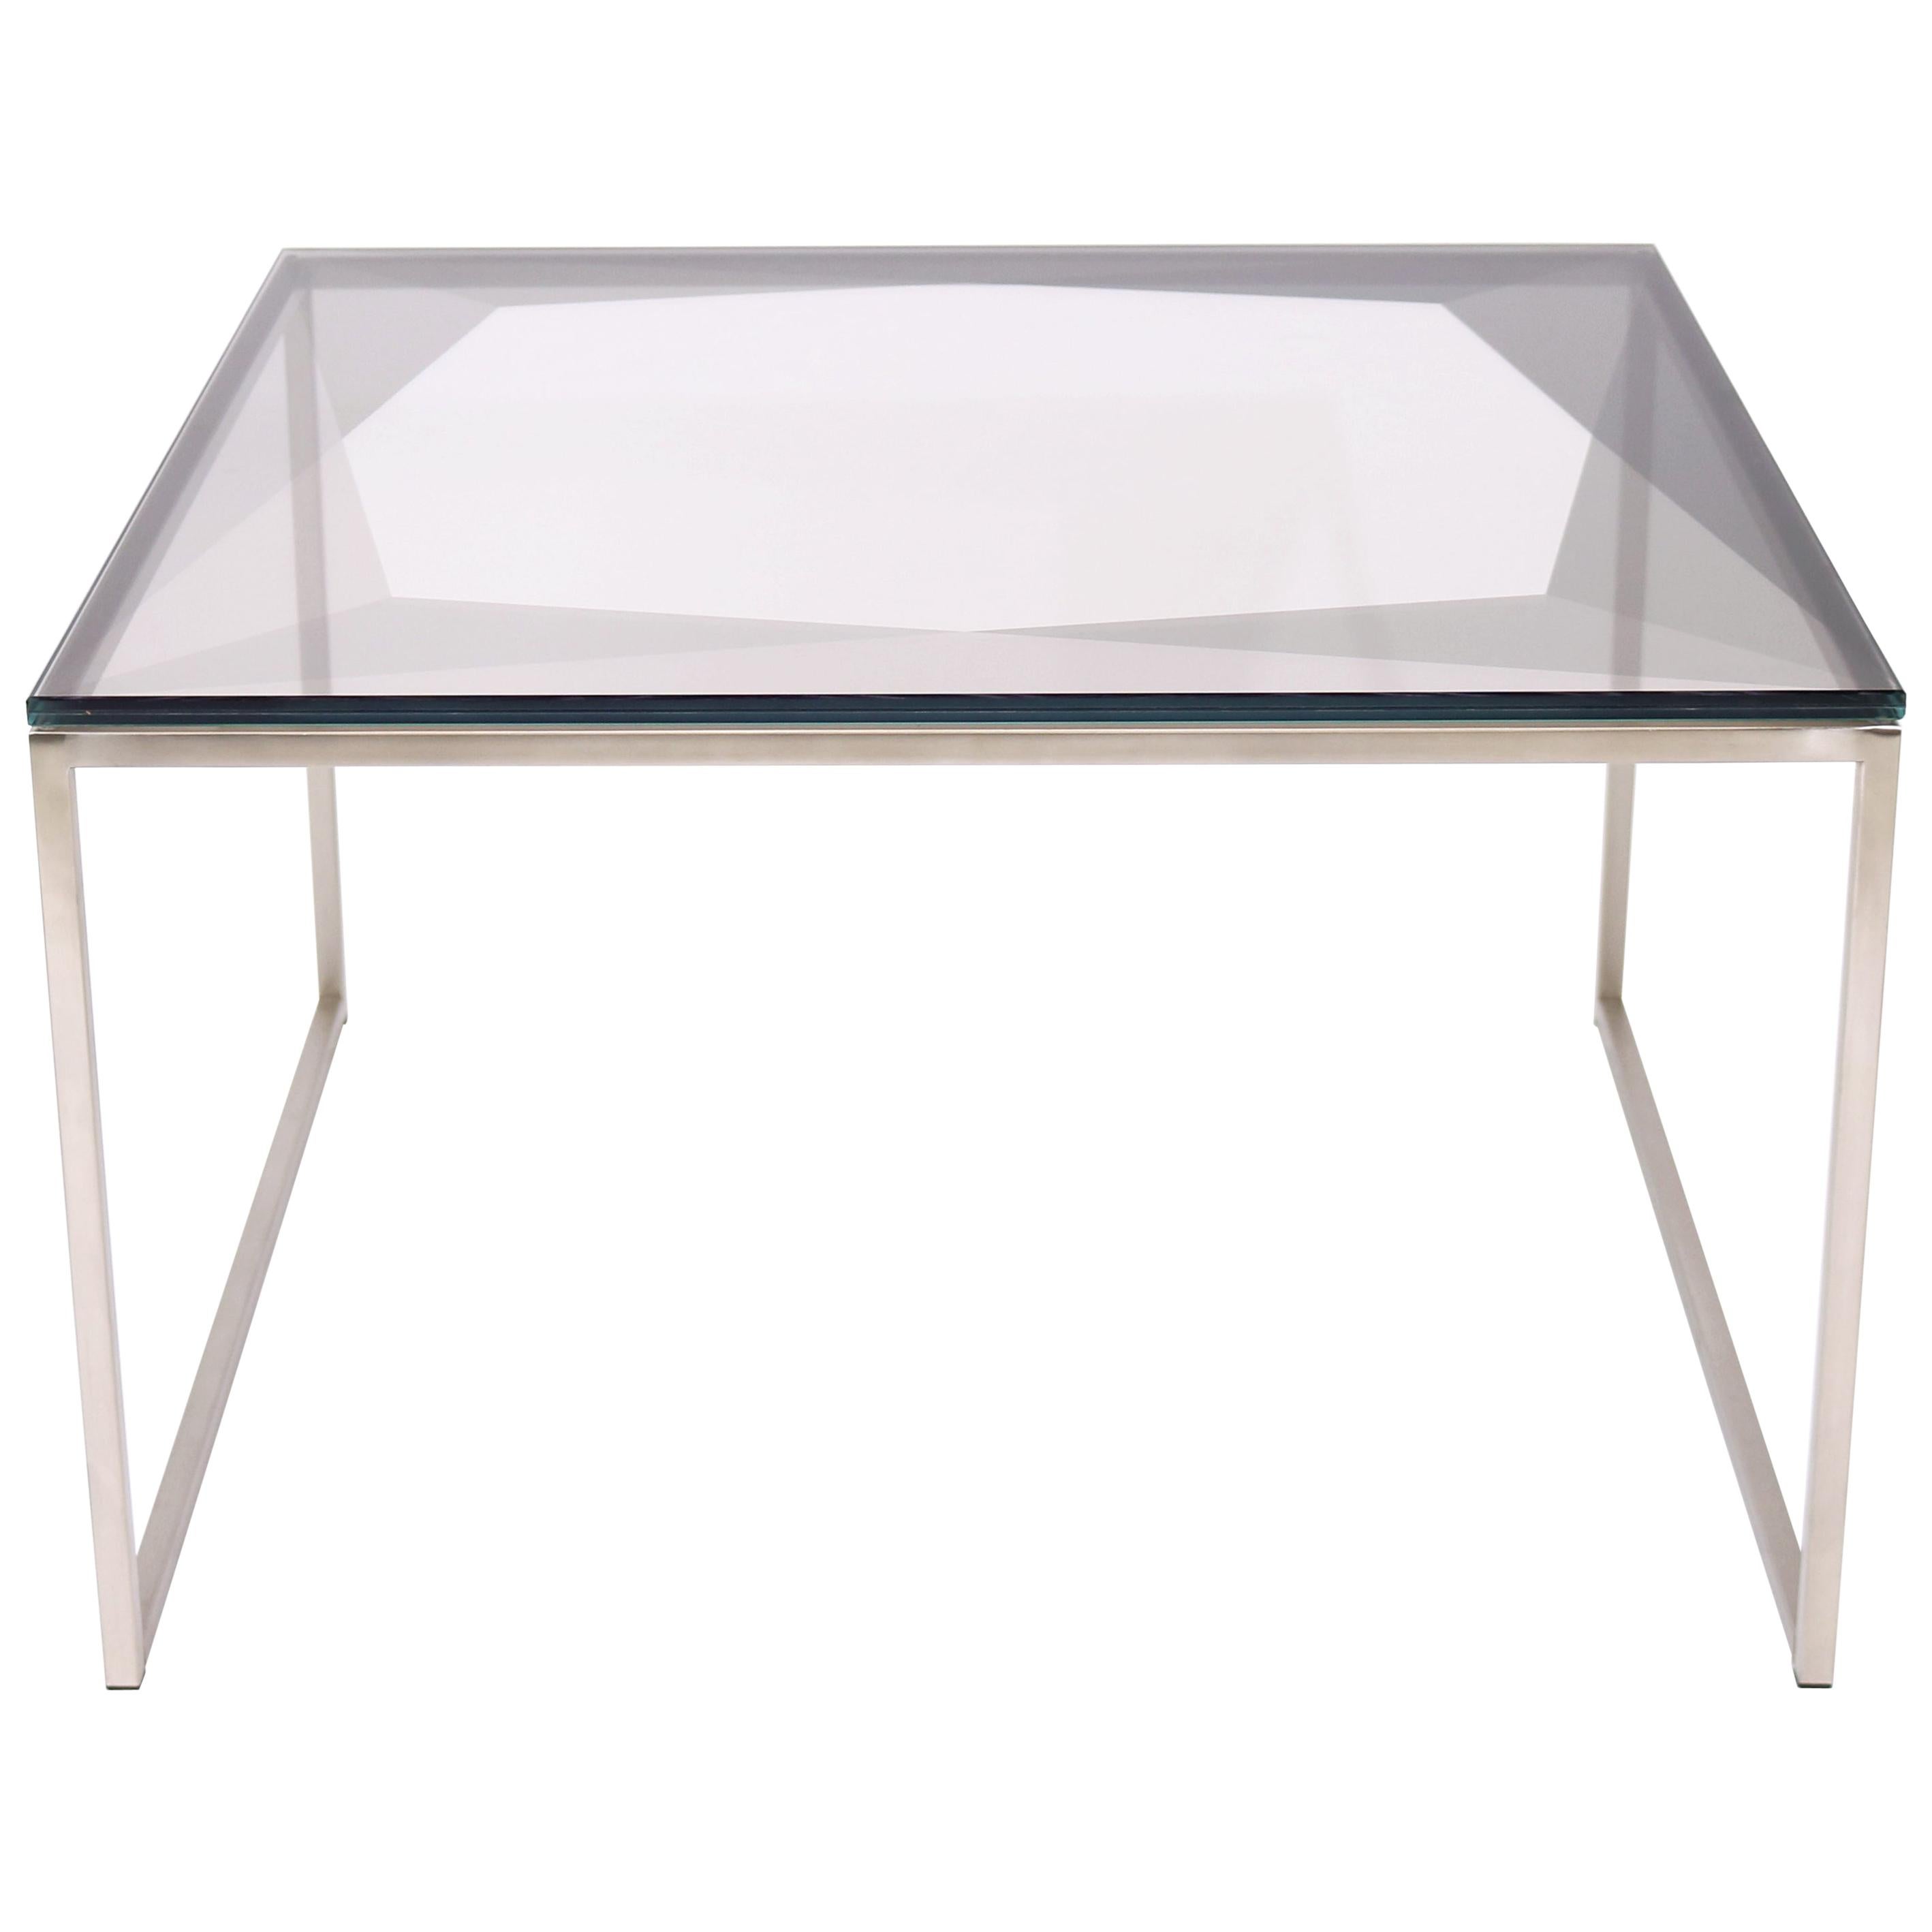 Table basse Gem en verre gris avec base en nickel par Debra Folz